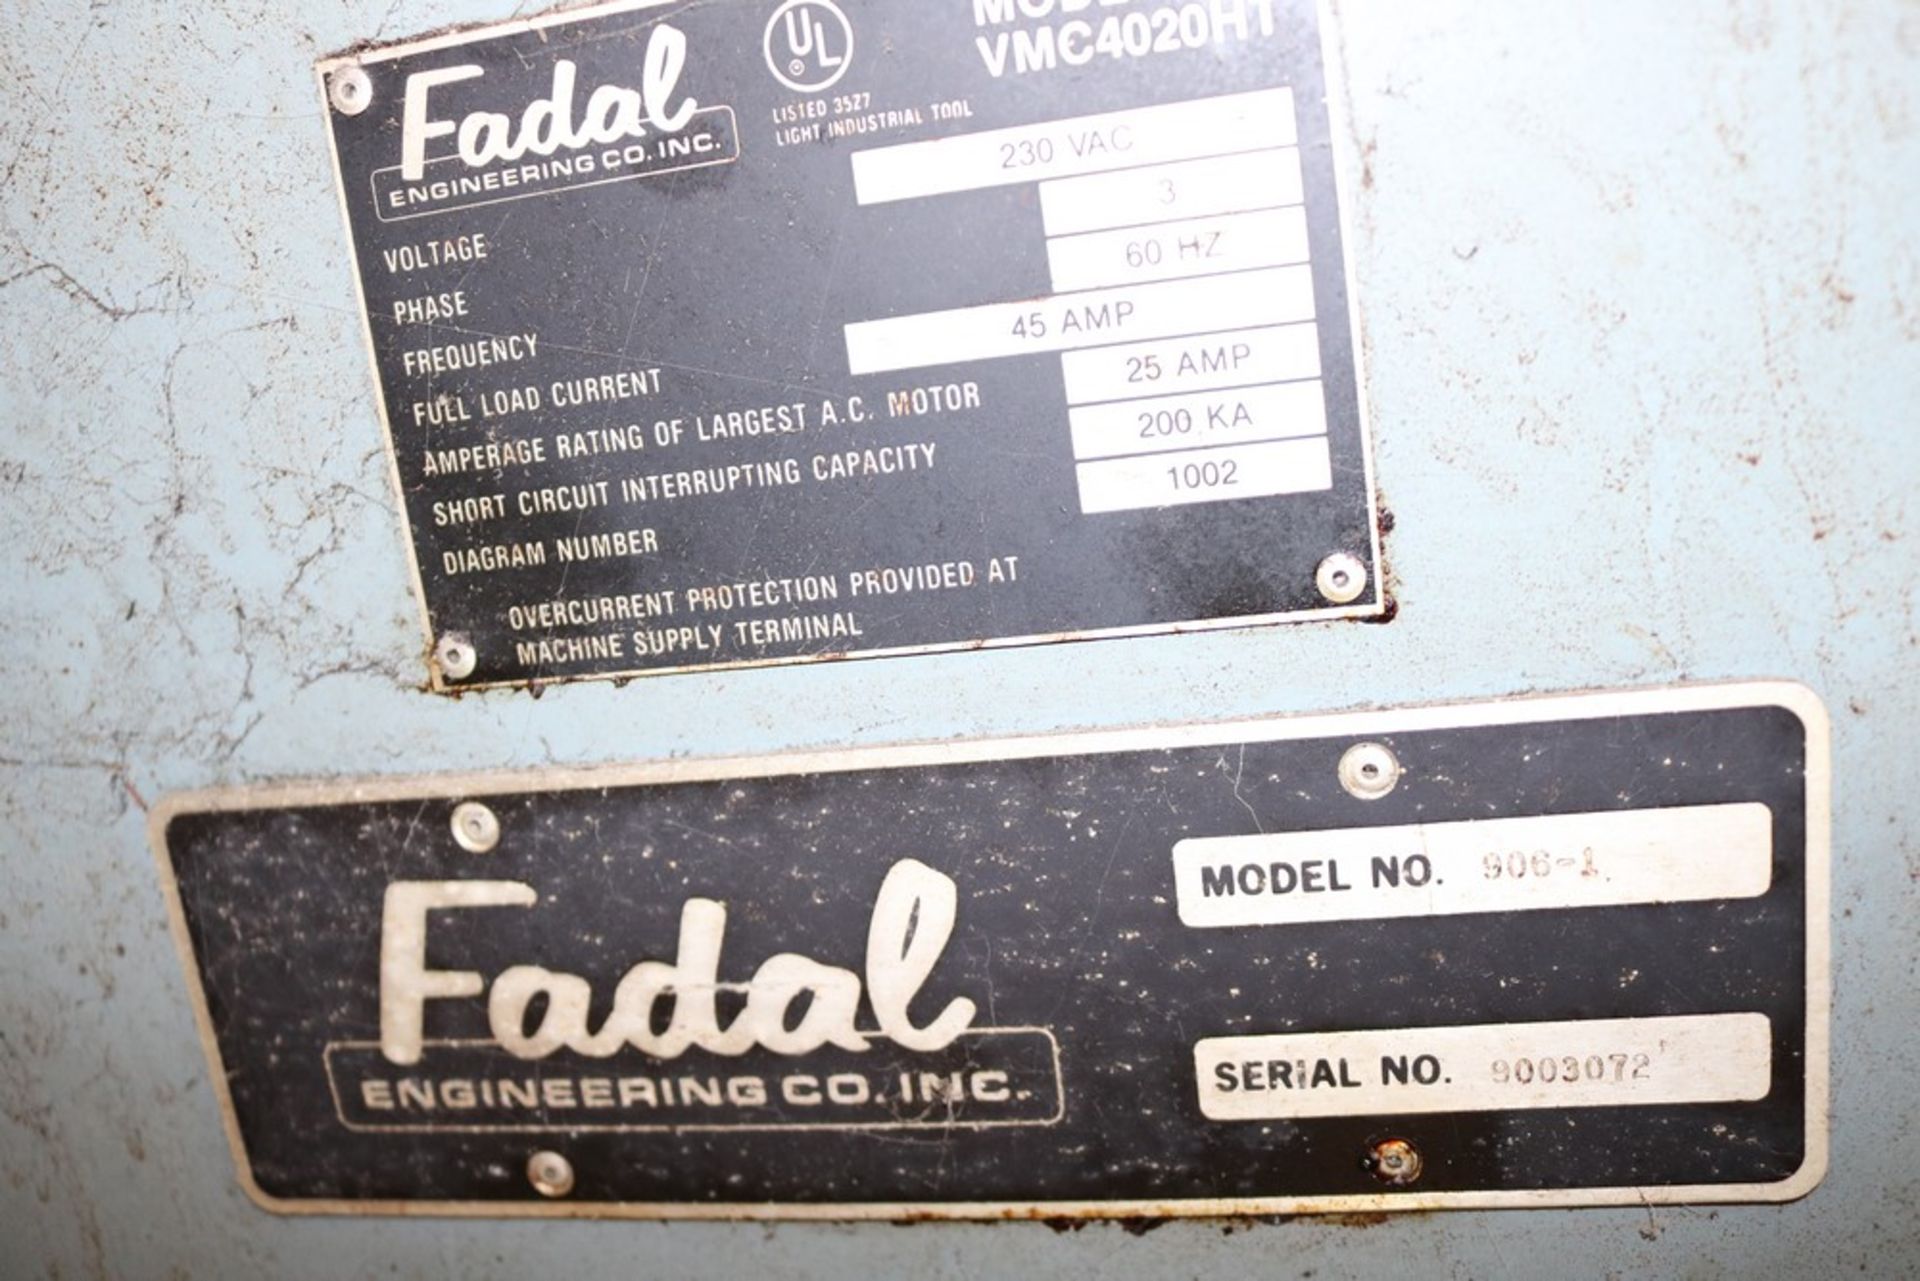 1990 Fadal VMC 4020 HT, Model 906-1, BT-40, 21 Tool Umbrella Tool Changer. (Kurt Vise Not Included) - Image 13 of 15